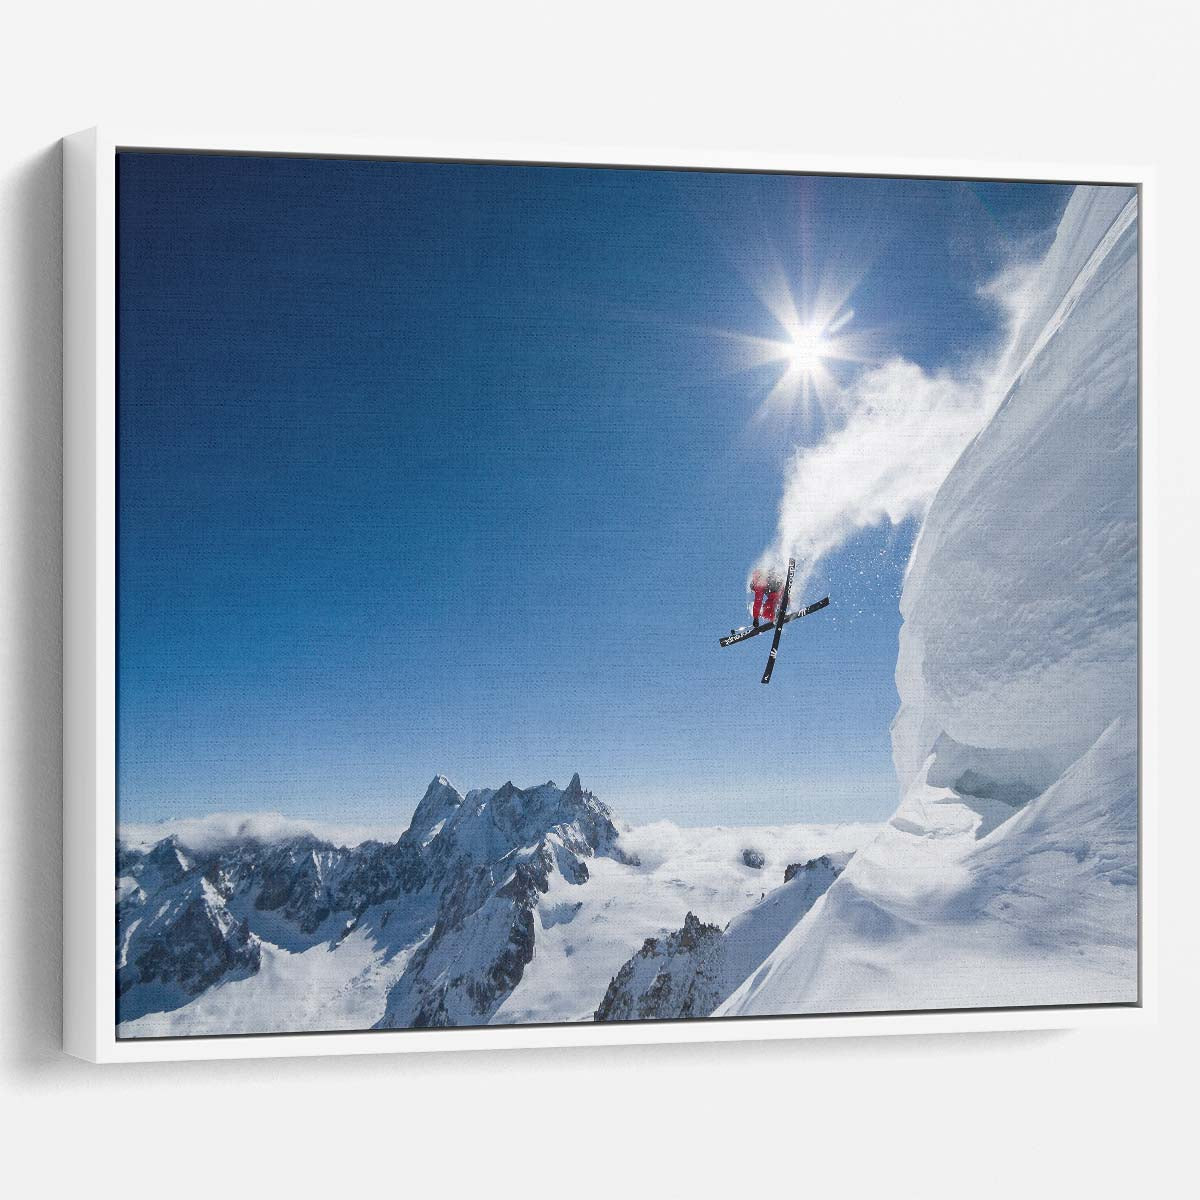 Extreme Ski Jump in Snowy Alps - Tristan Shu Wall Art